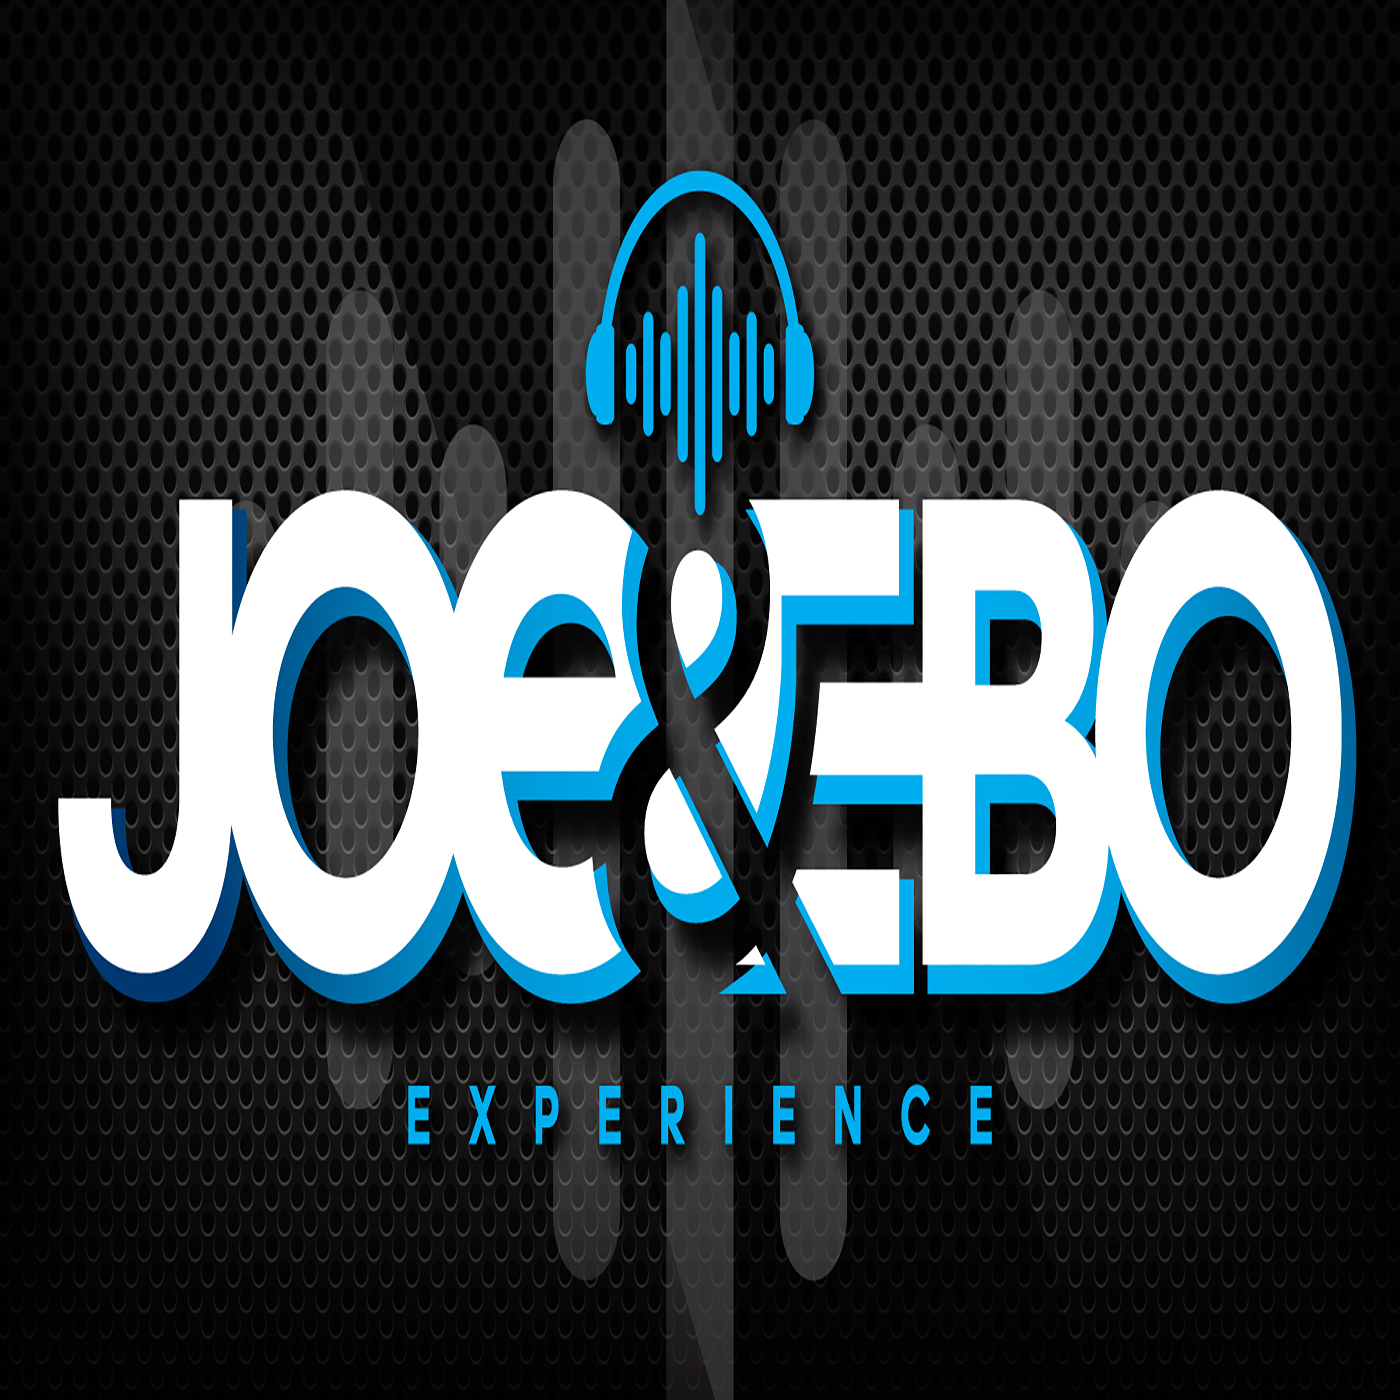 Joe & Ebo Experience: Flamethrowers